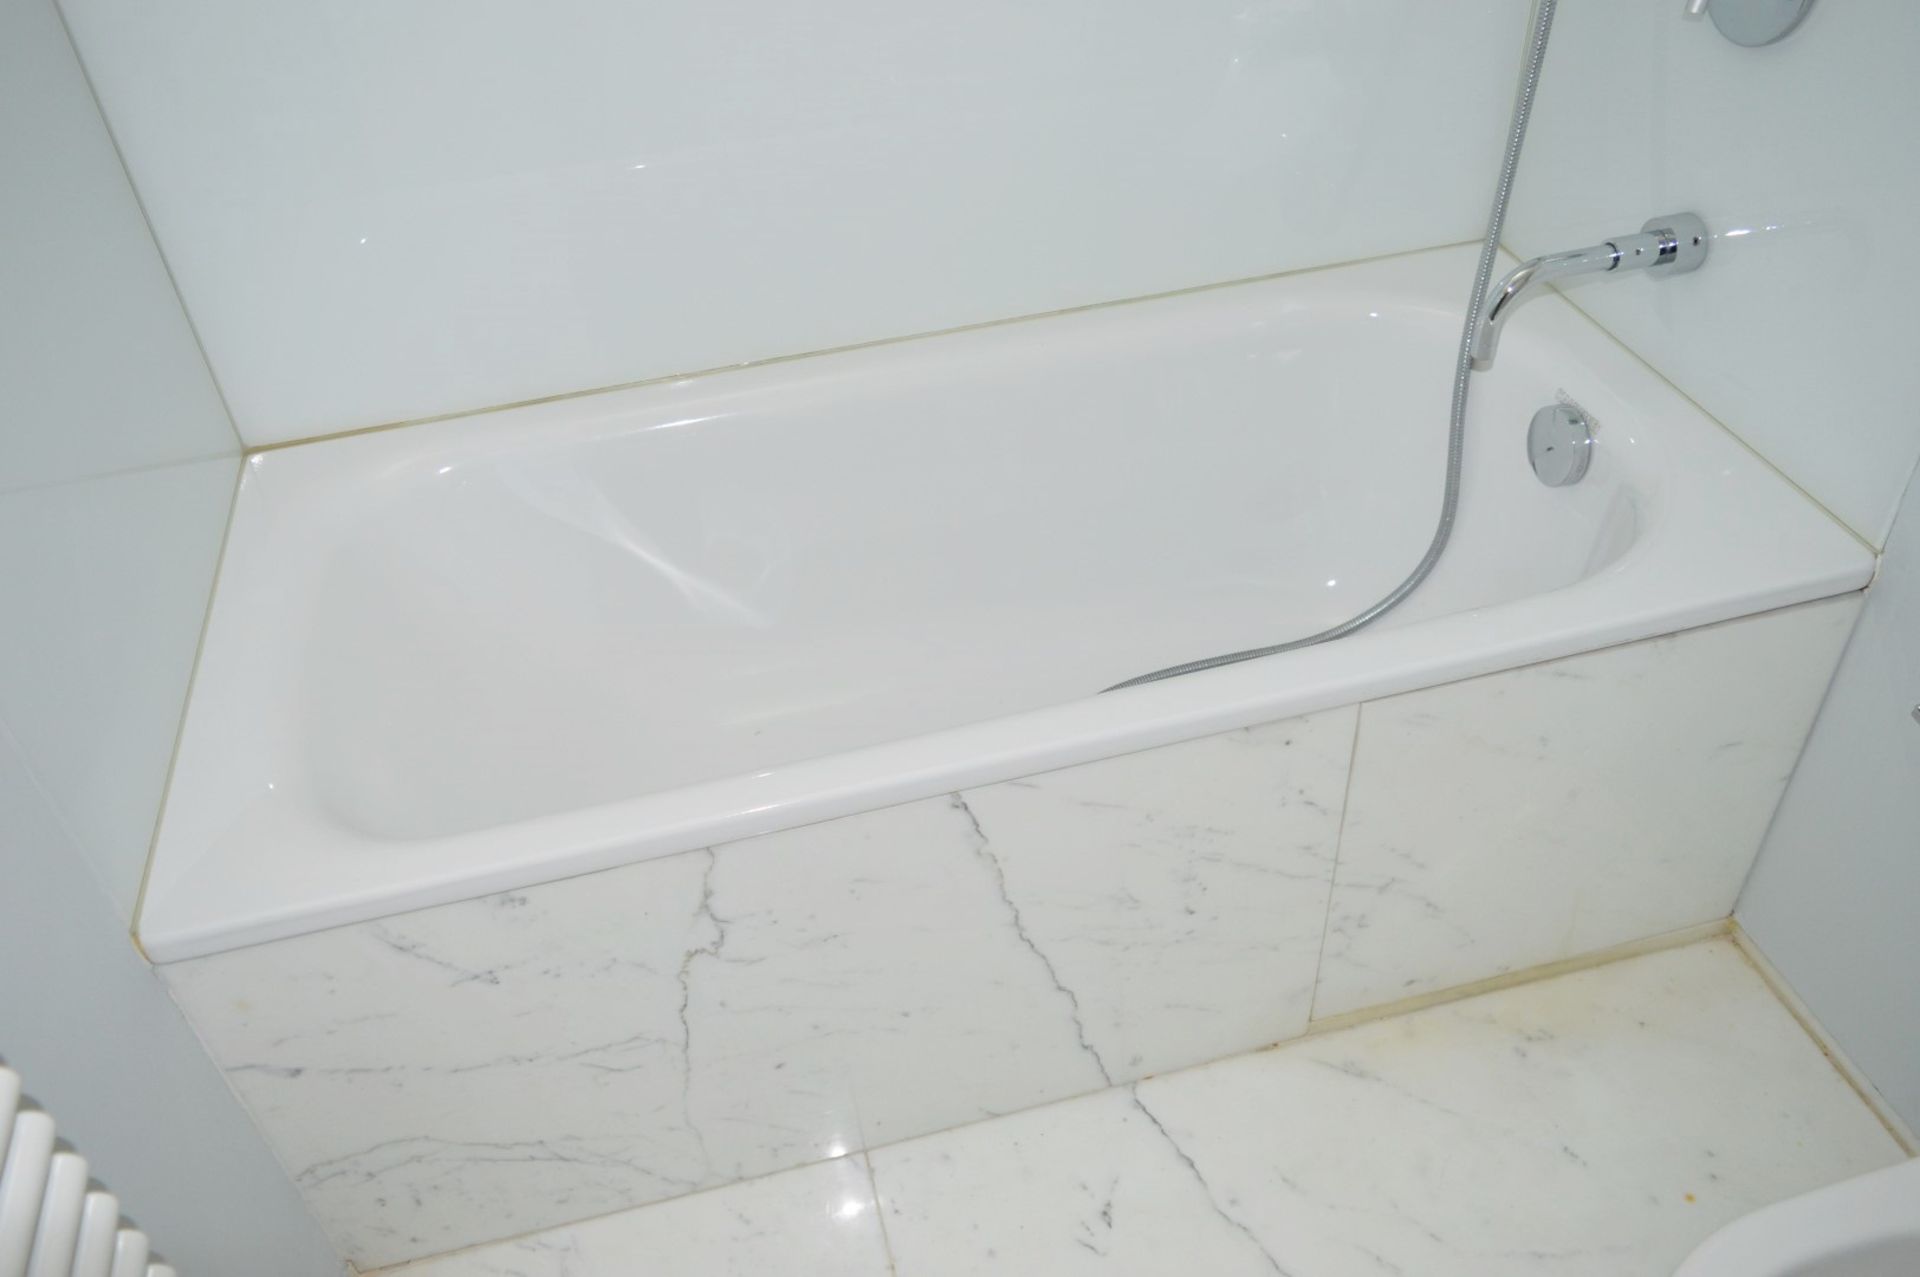 1 x Bathroom Suite Including Duravit Starck Sink Basin, Dorn Bracht Mixer Tap, Duravit Wall Hung - Image 2 of 29